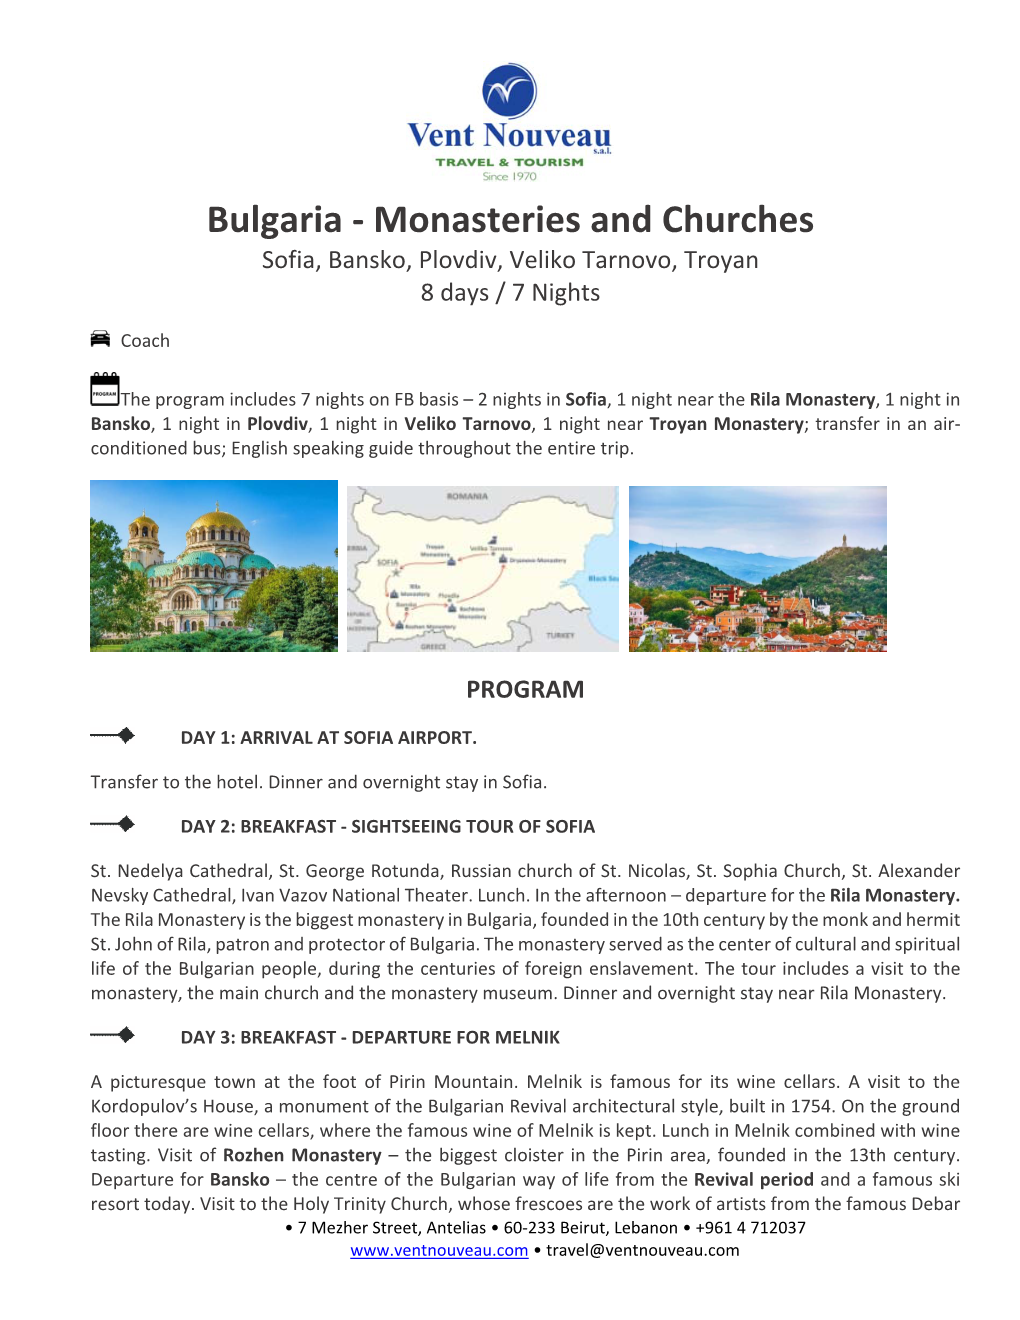 Bulgaria ‐ Monasteries and Churches Sofia, Bansko, Plovdiv, Veliko Tarnovo, Troyan 8 Days / 7 Nights